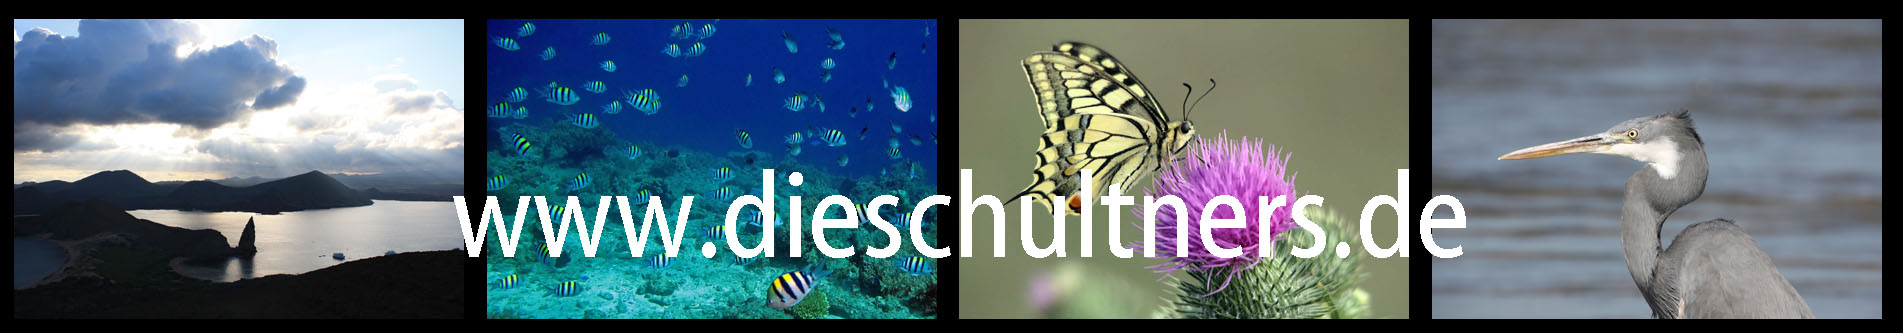 Banner www.dieschultners.de